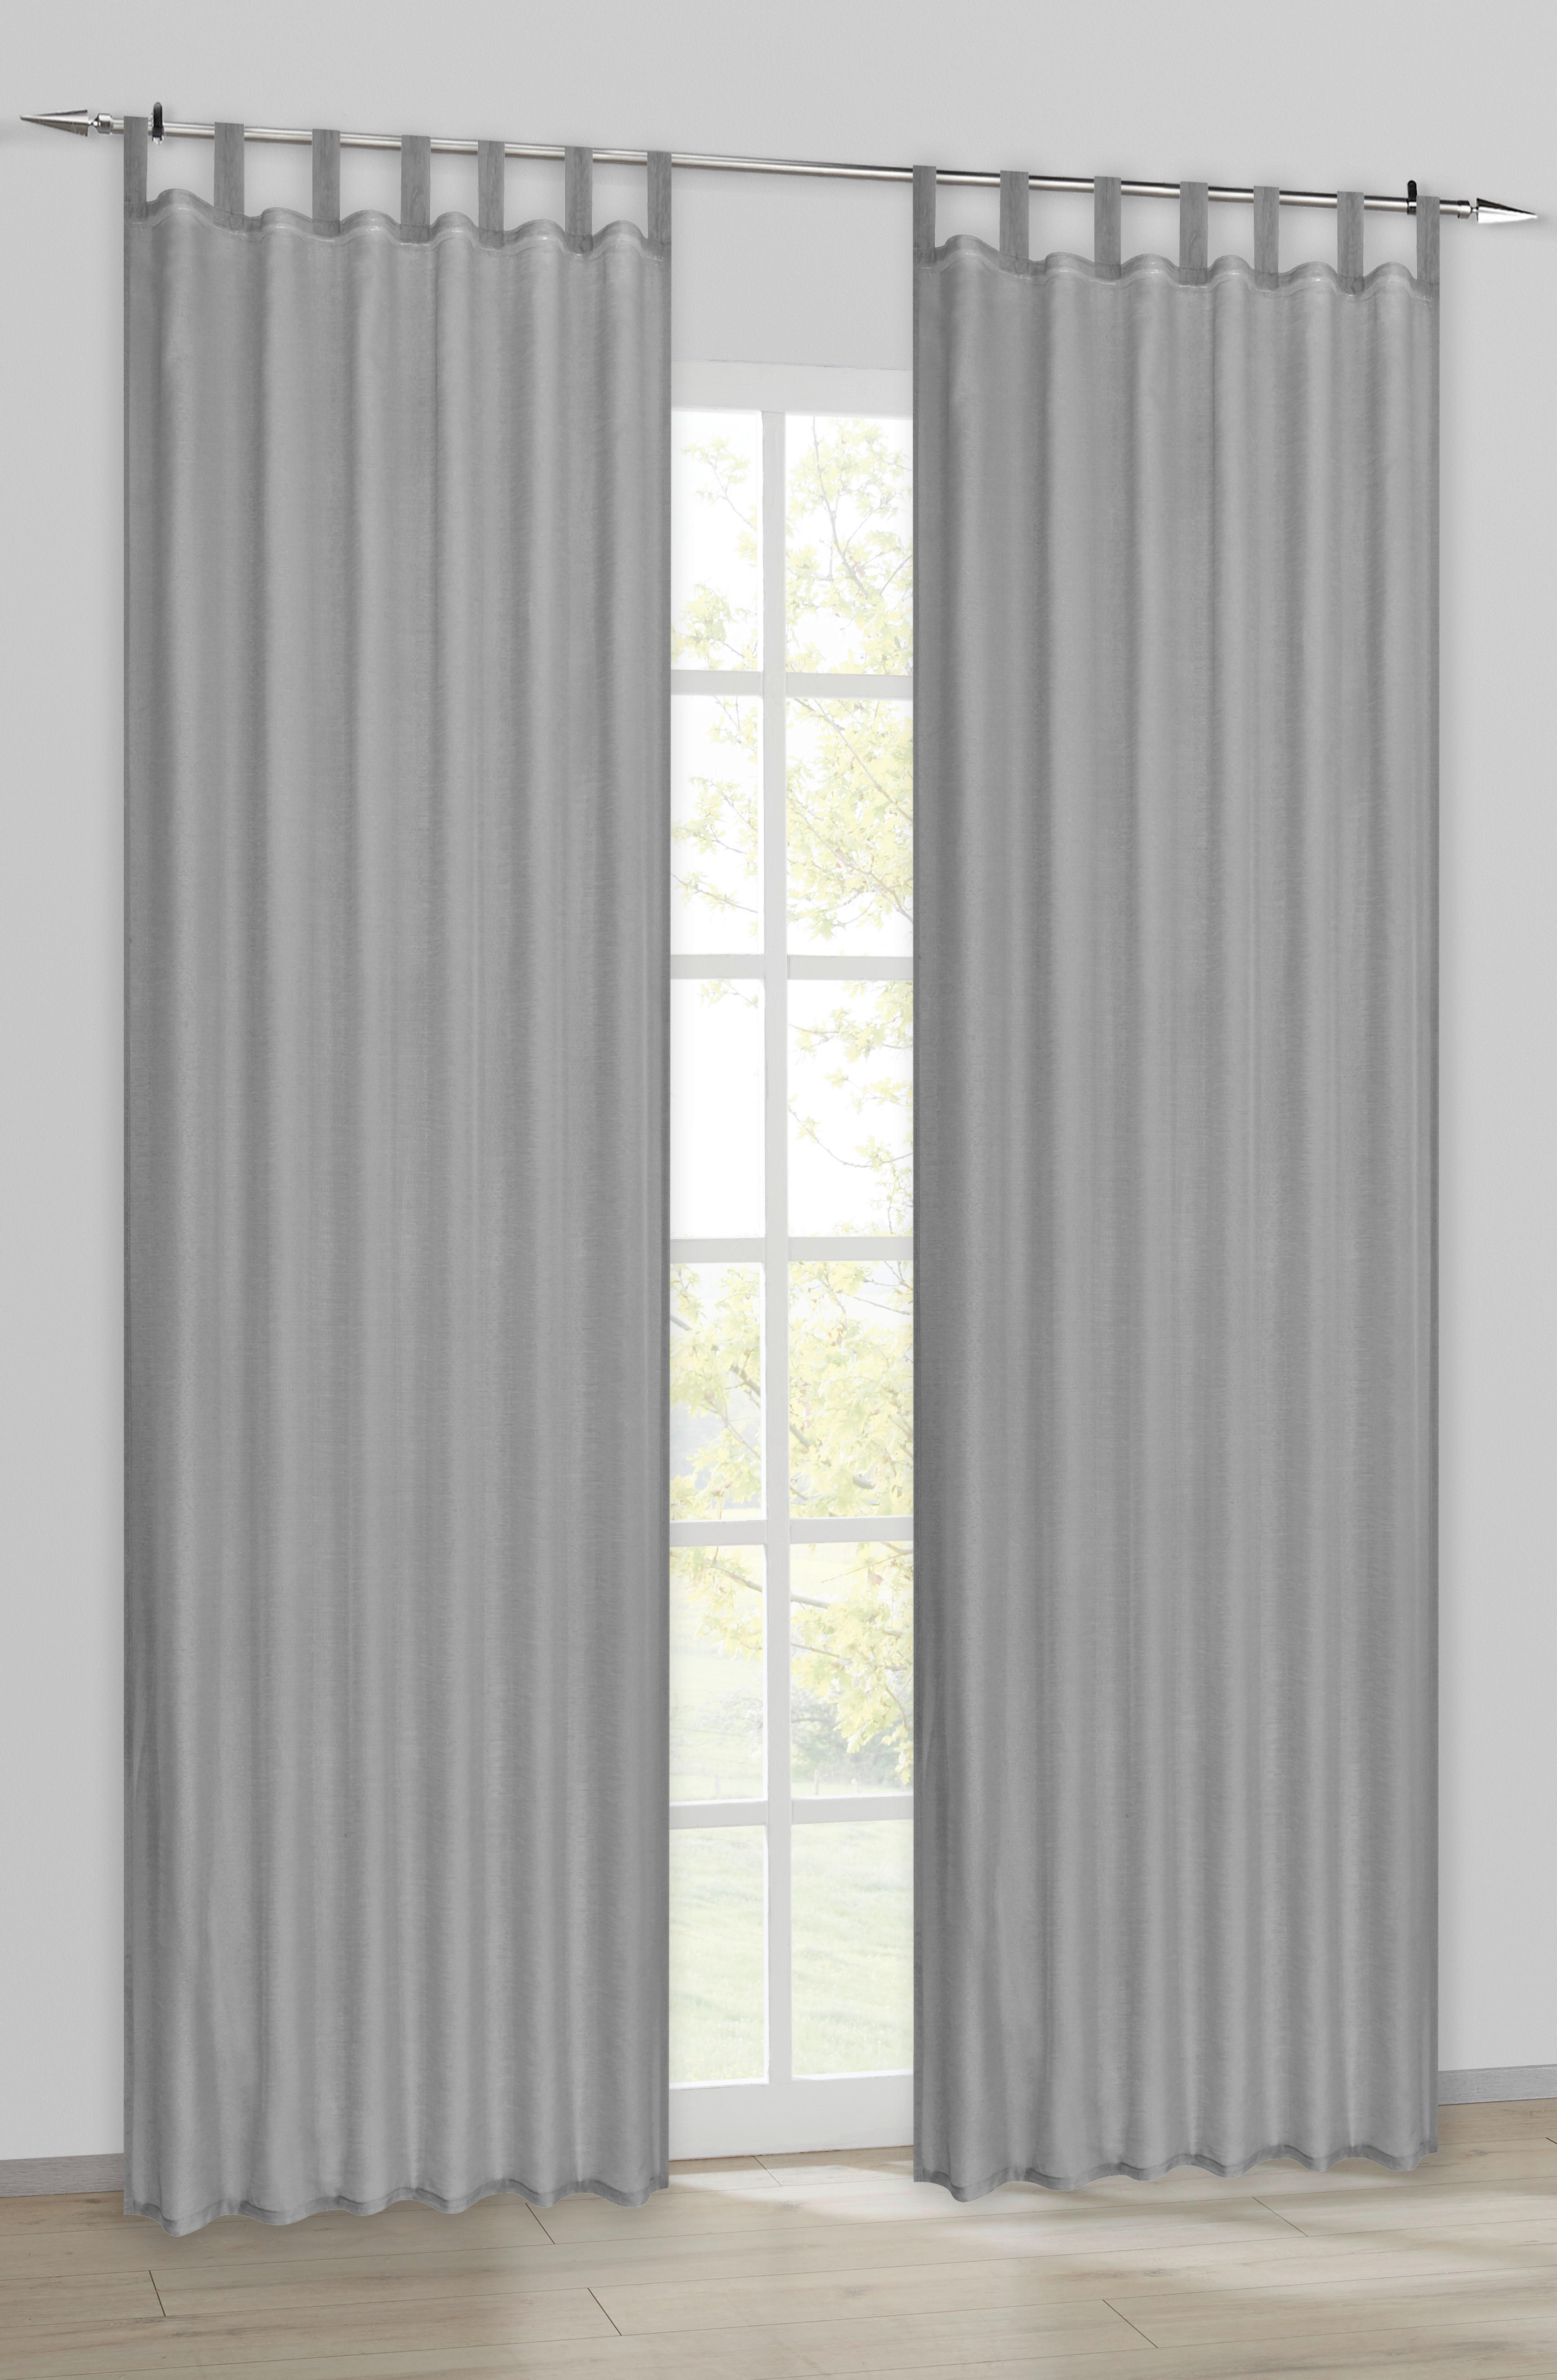 Kombivorhang Pearl grau B/L: ca. 135x245 cm Pearl - grau (135,00/245,00cm) - ACUS design collection